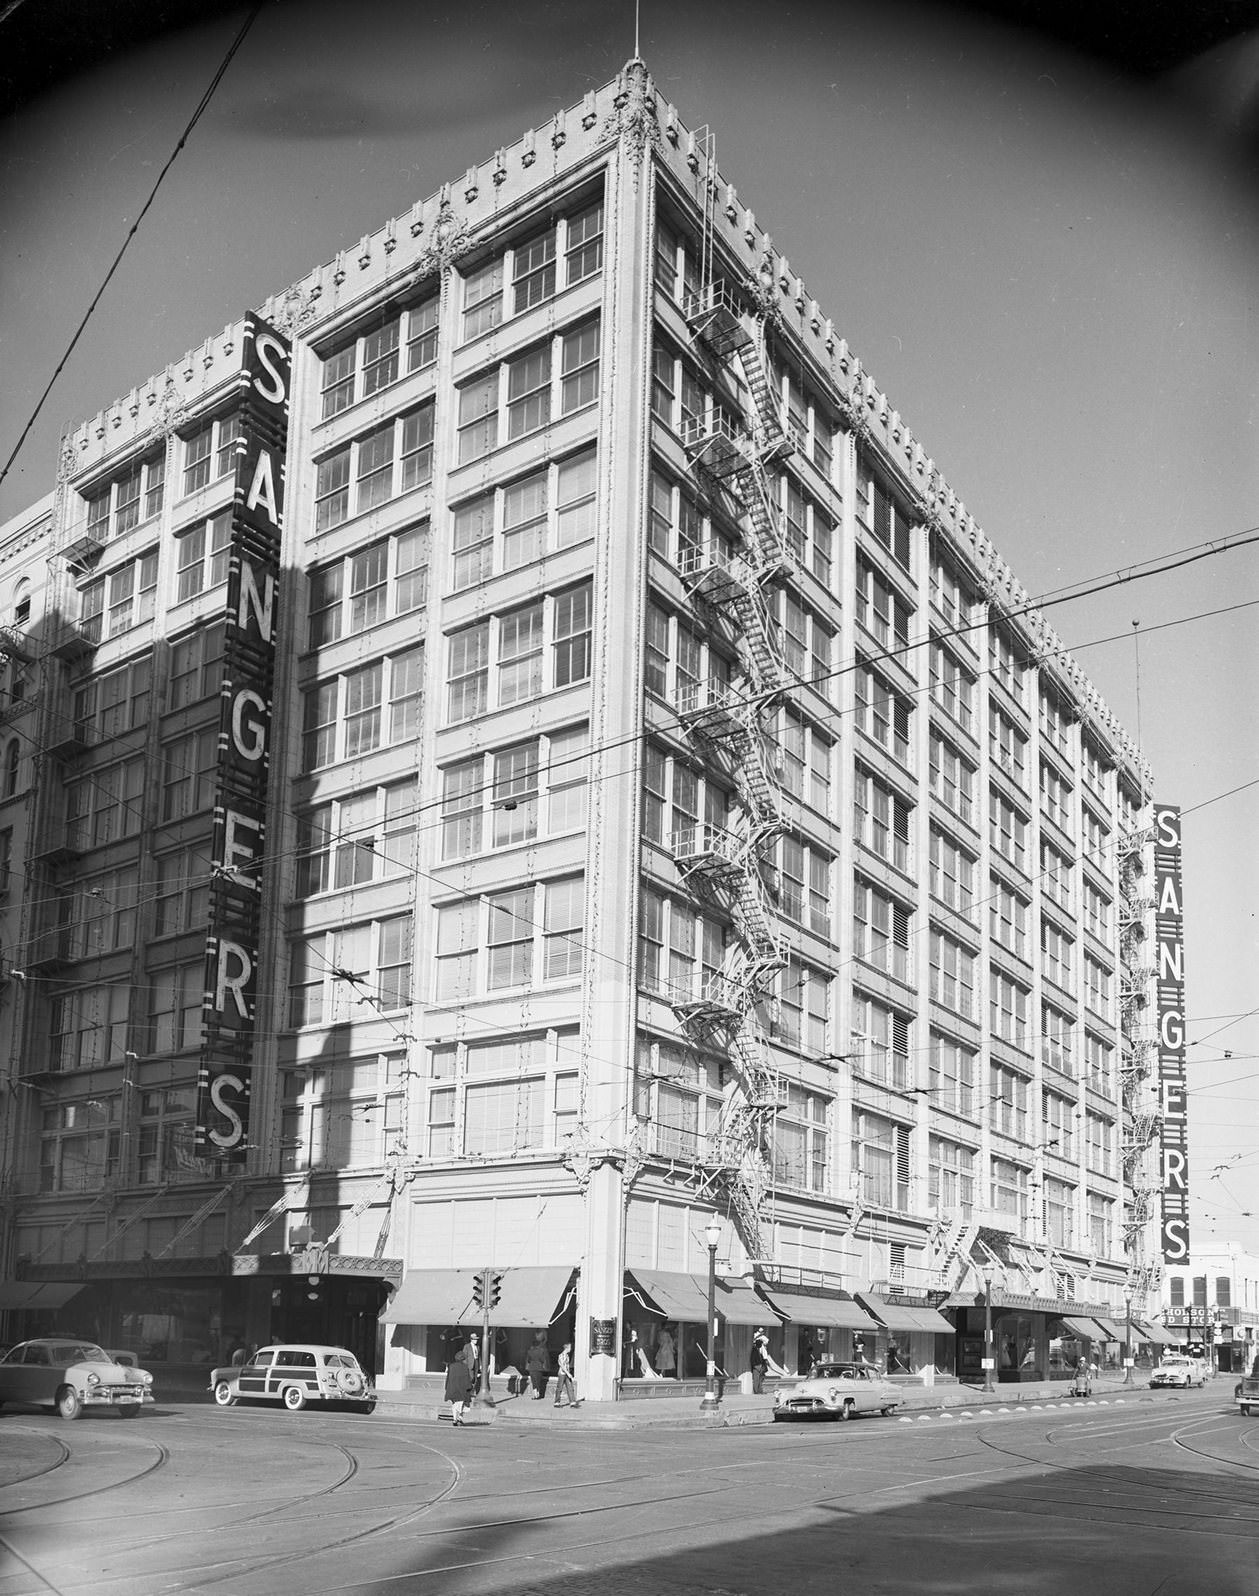 Sanger's Department Store, downtown Dallas, 1950